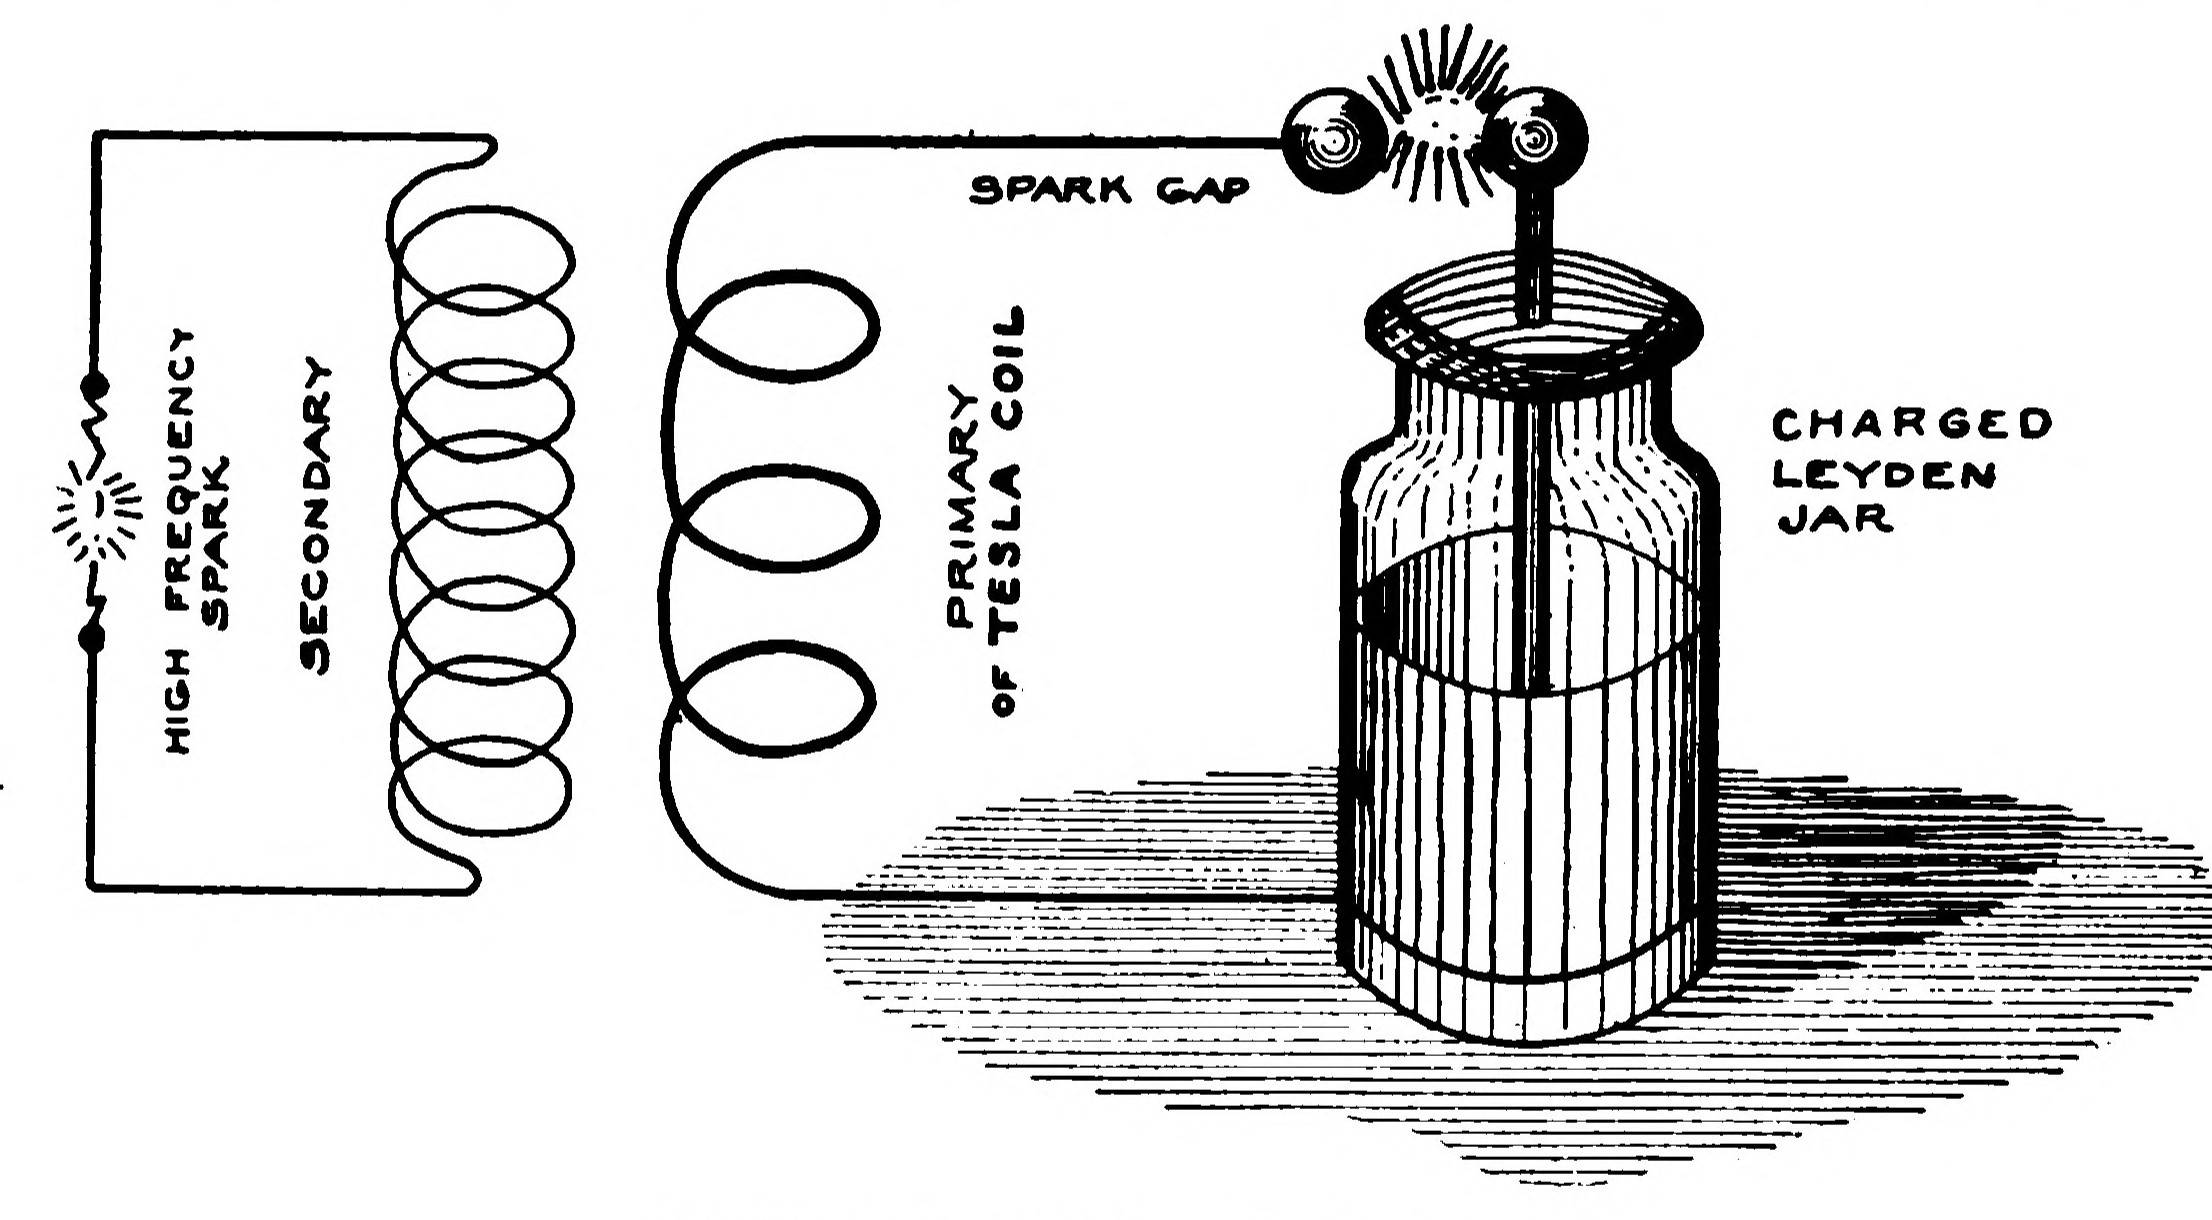 FIG. 170.—Tesla Coil Circuits.